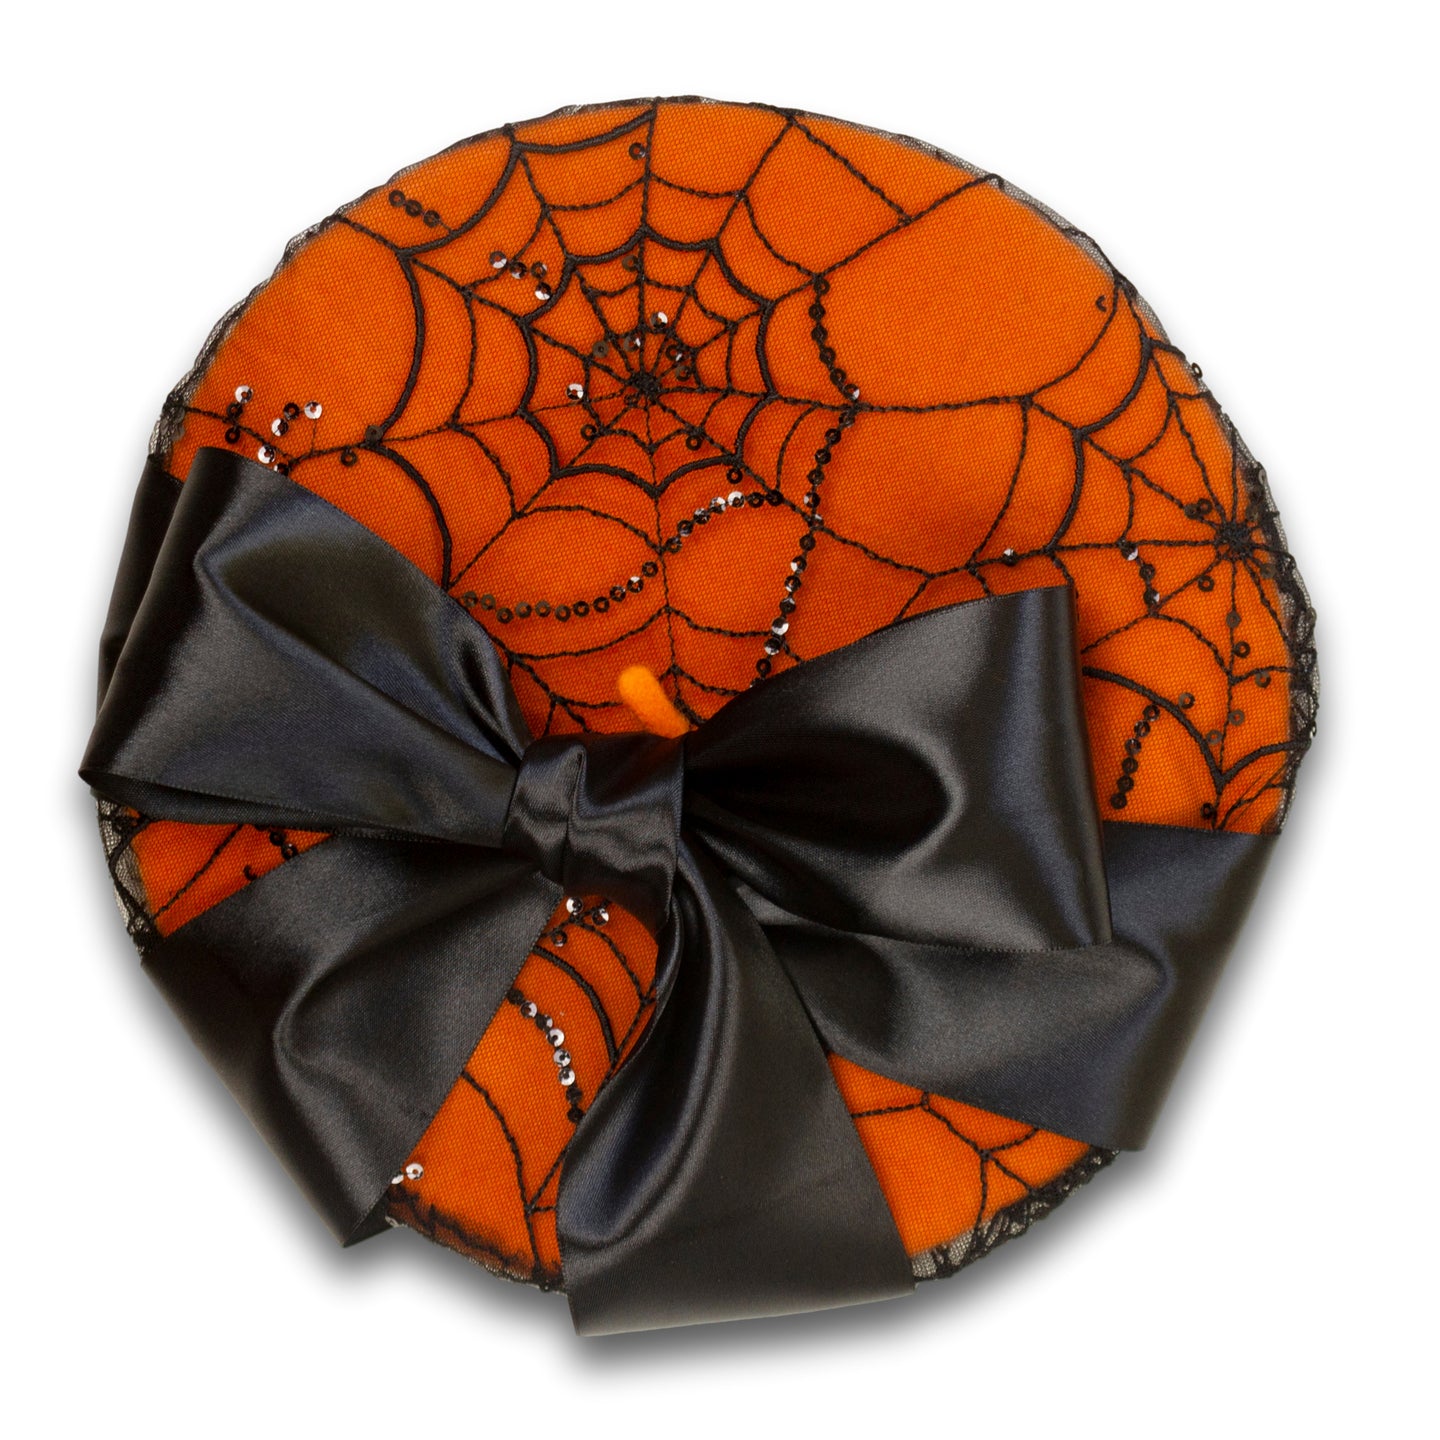 Cobweb Beret in Orange